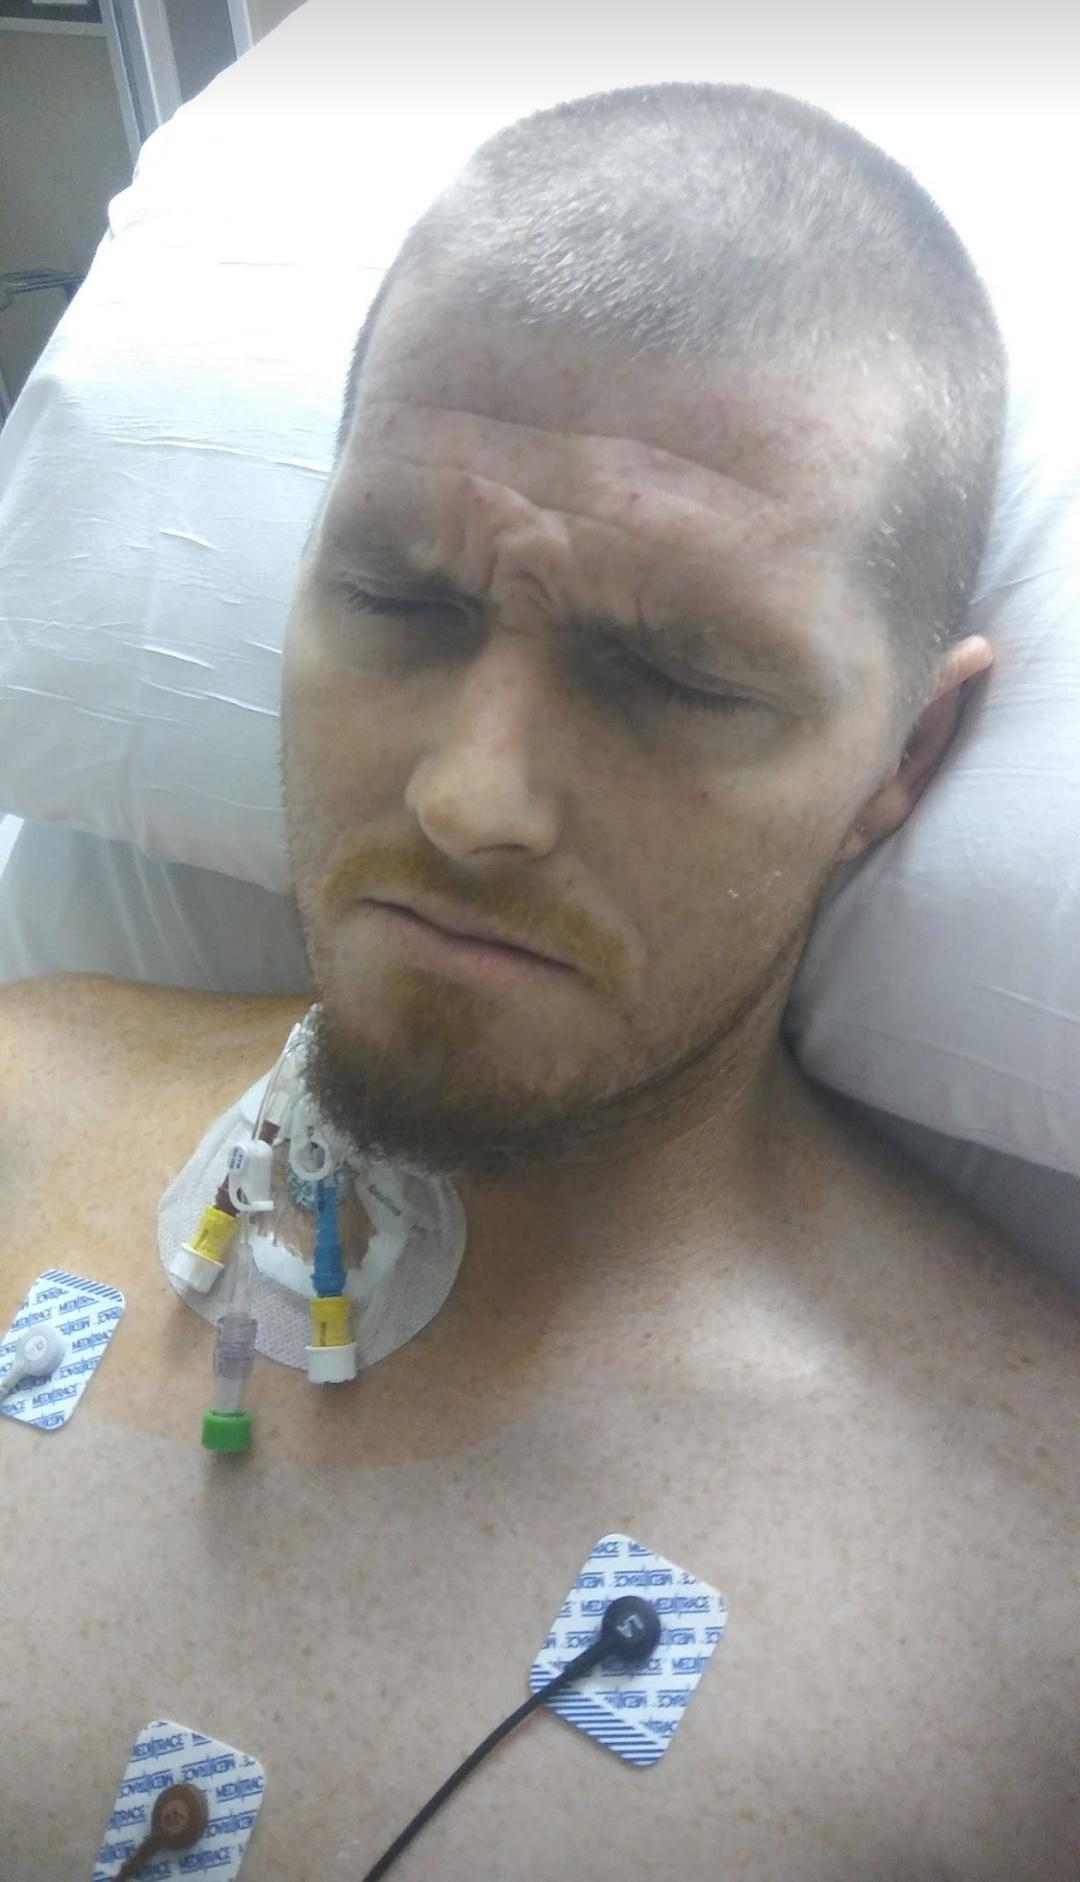 Steven in the hospital. (Courtesy of <a href="https://www.instagram.com/Sonyajohnson0719/">Sonya Johnson</a>)